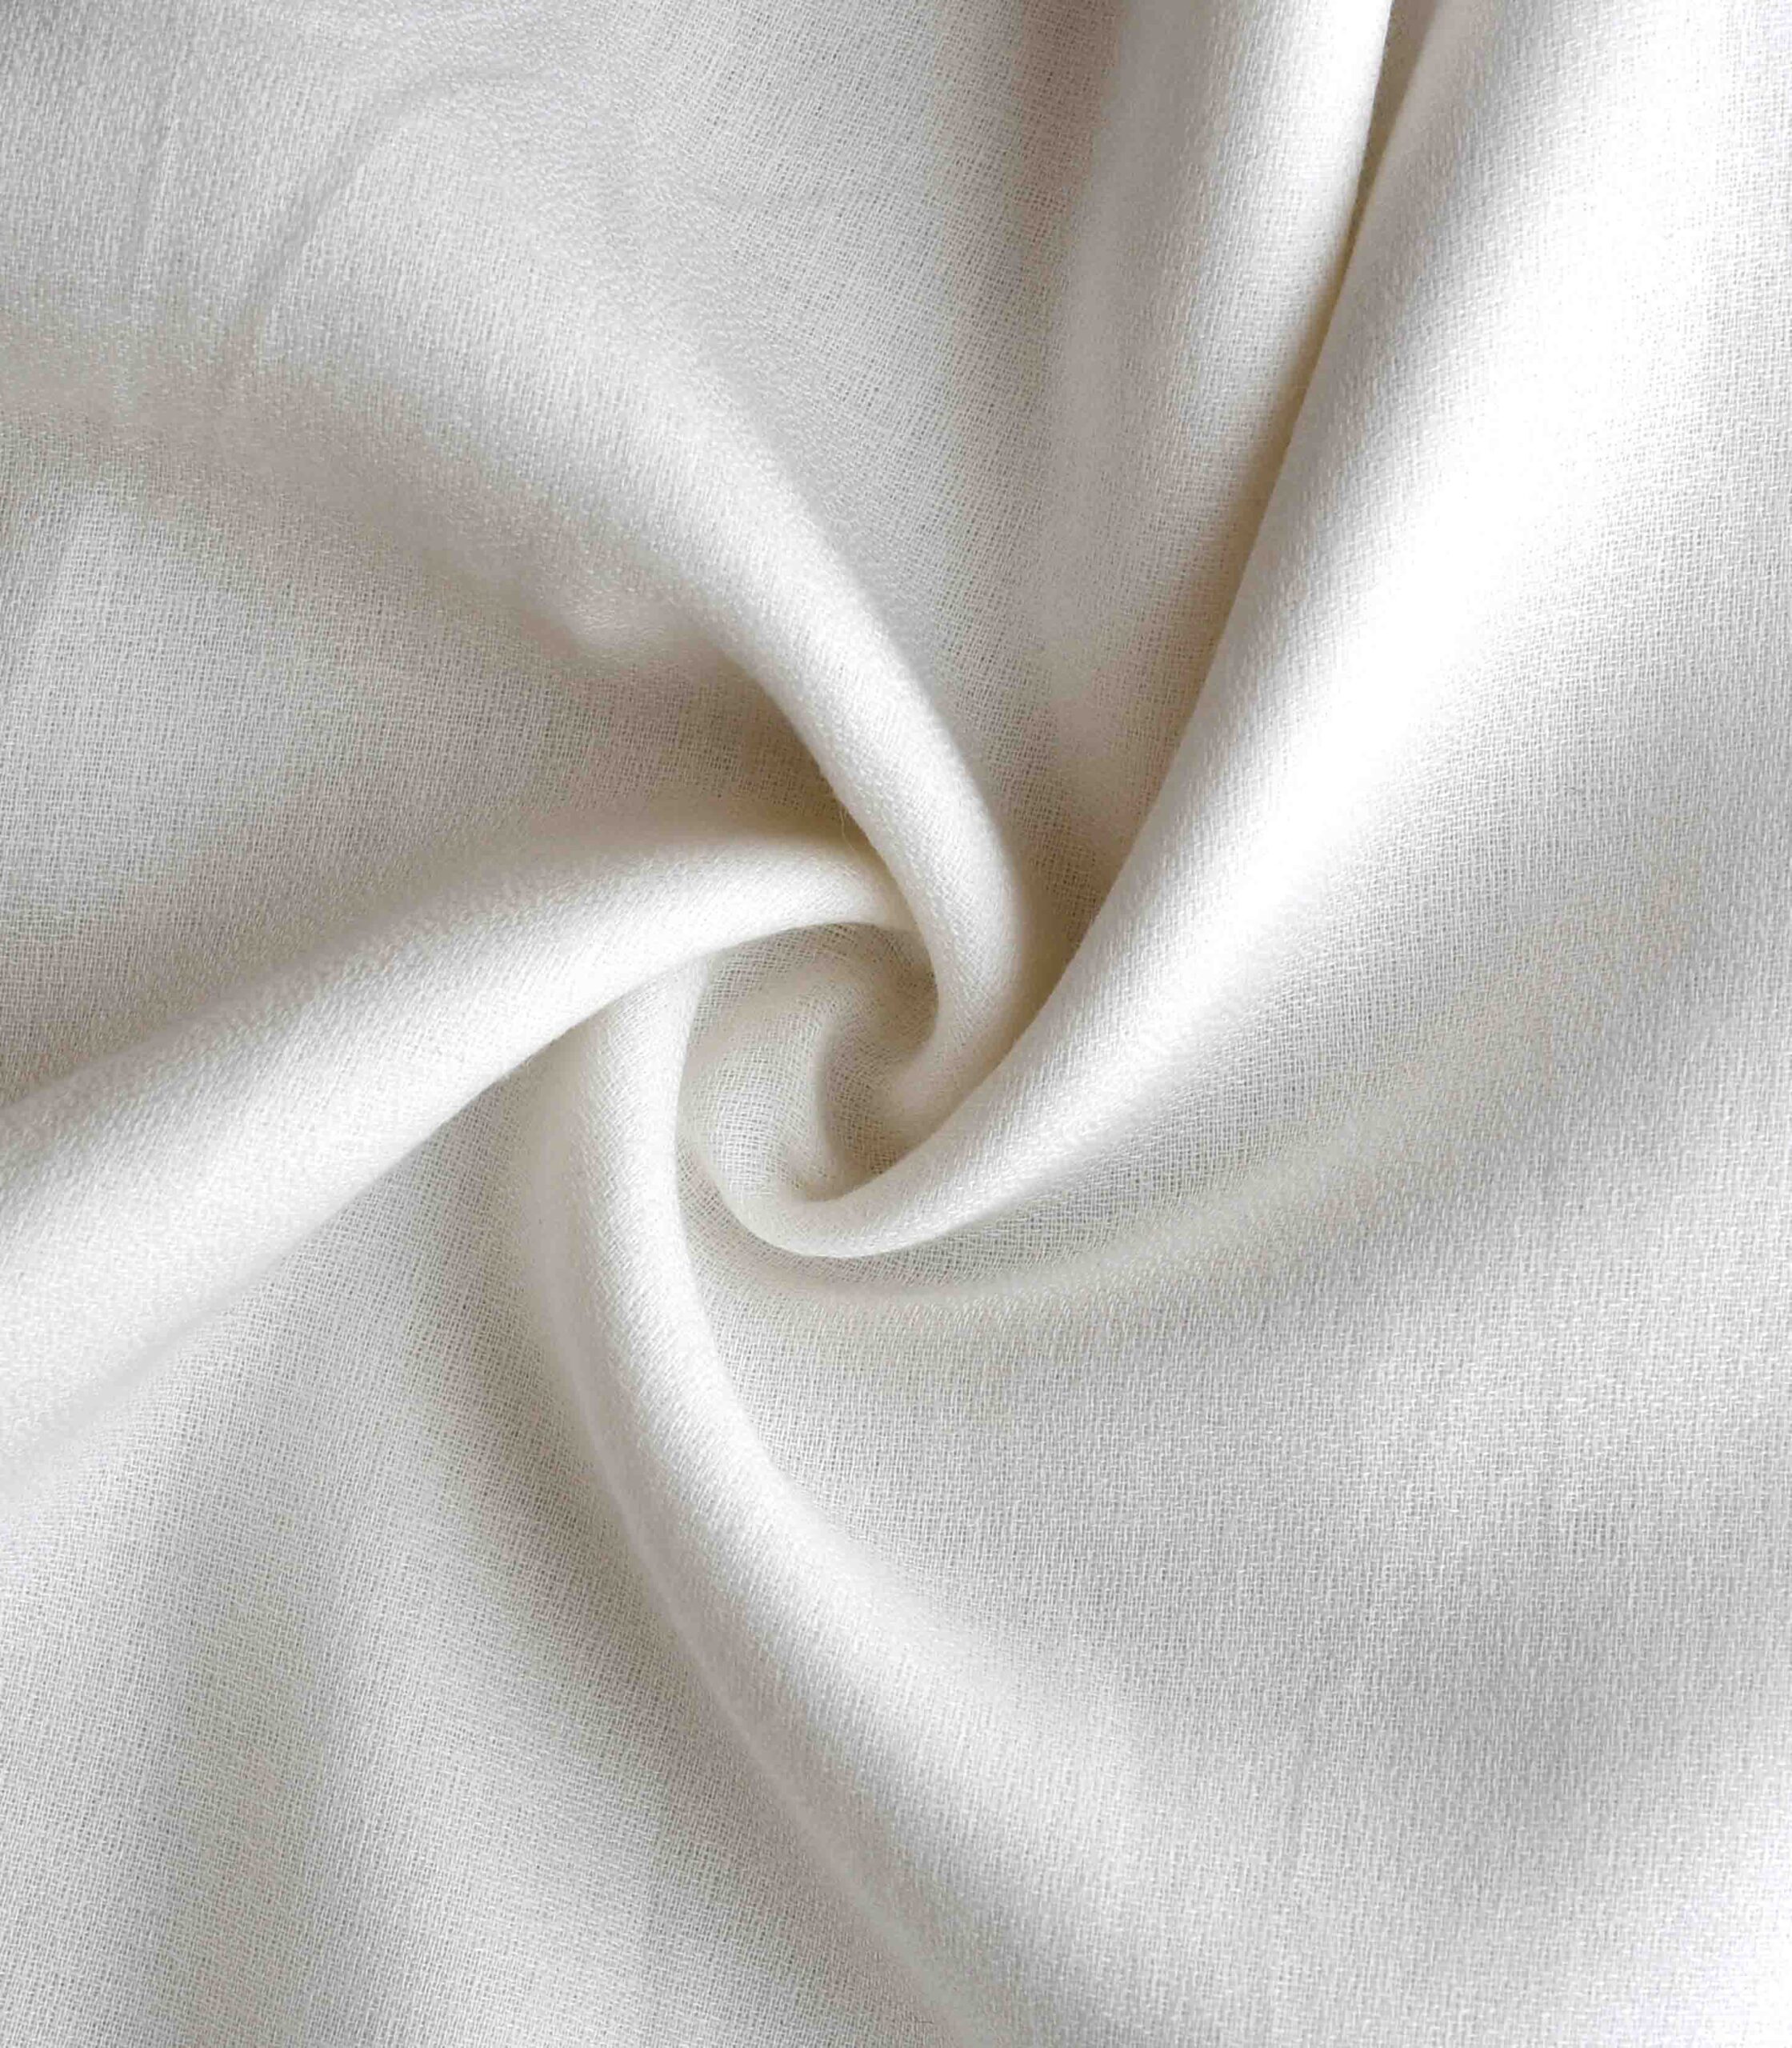 Cotton Modal Fabric at Rs 360/kilogram, कॉटन मॉडल फैब्रिक in Tiruppur